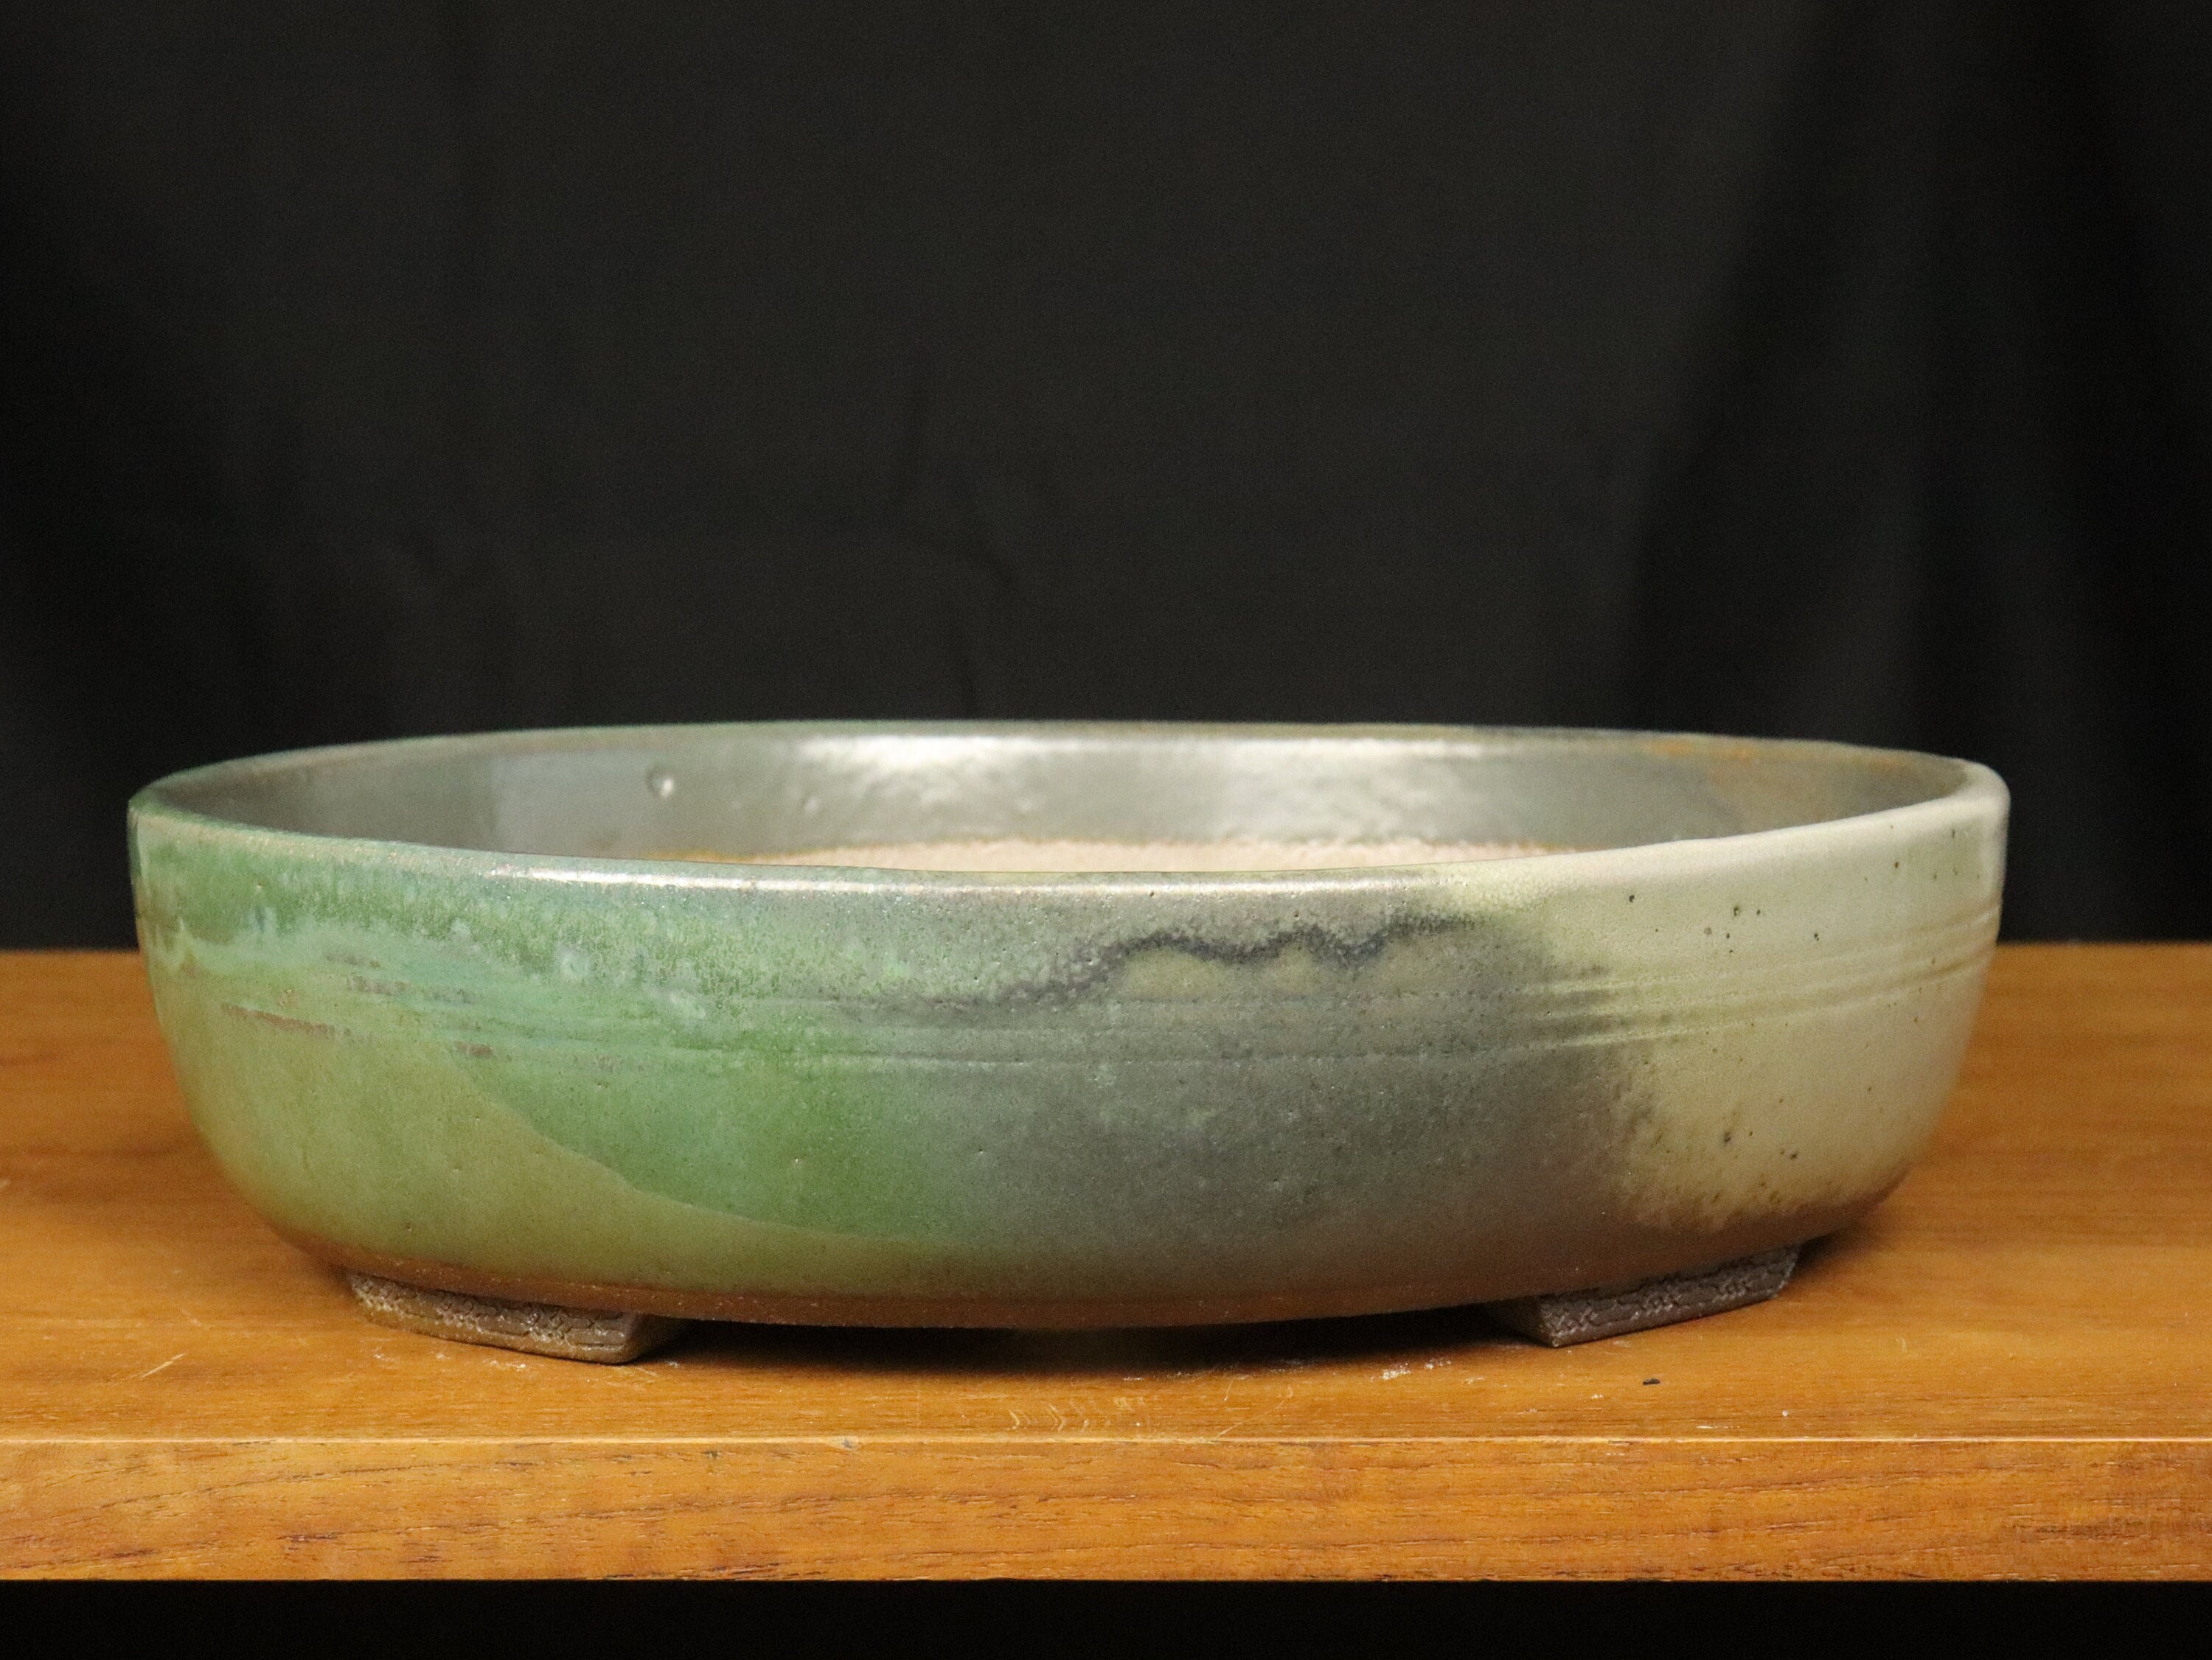 Ceramic Bonsai Pot/Saucer - Mustard Oval - 6 1/8 x 4 1/2 x 2 with Felt Feet